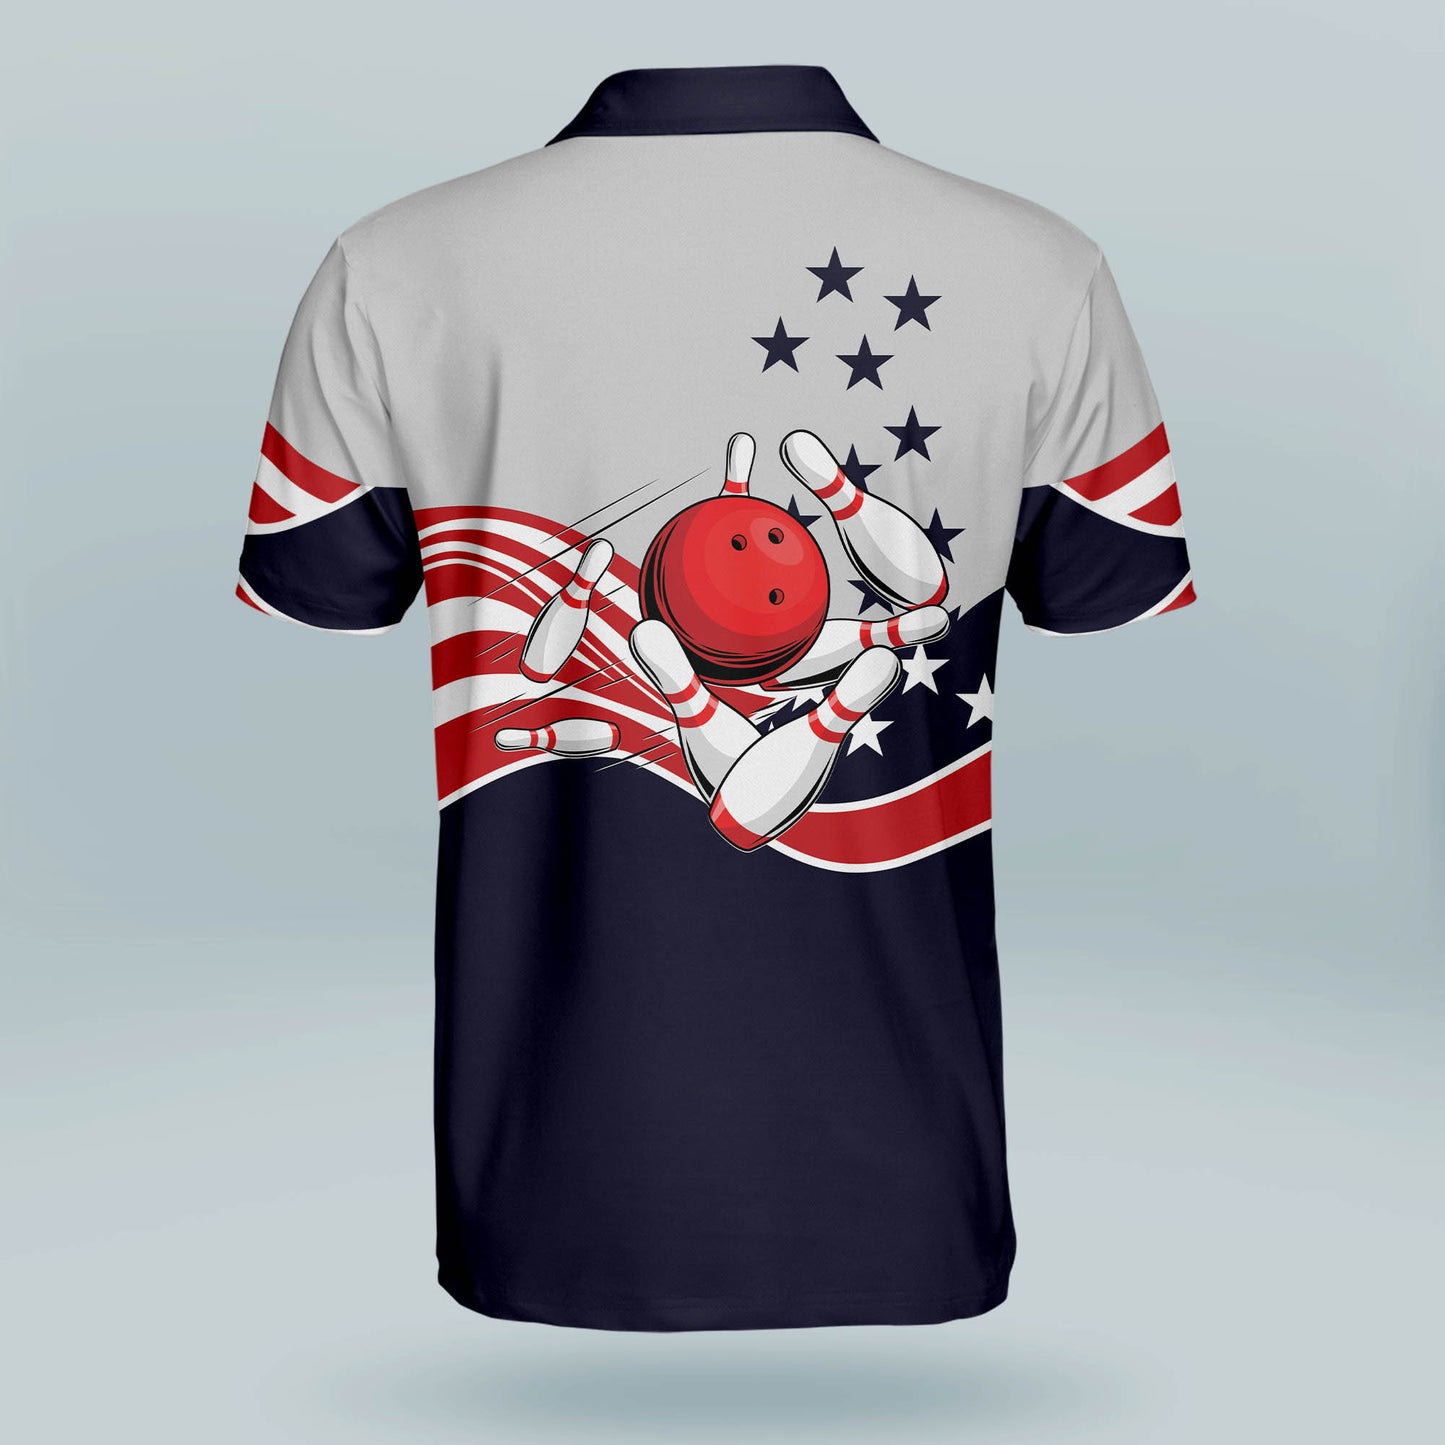 Custom Bowling Shirts For Men - Men's Custom Bowling Team Shirts - Crazy Cool Designer Bowling Shirt - American Flag Short Sleeve Bowling Shirts Mens BM0088